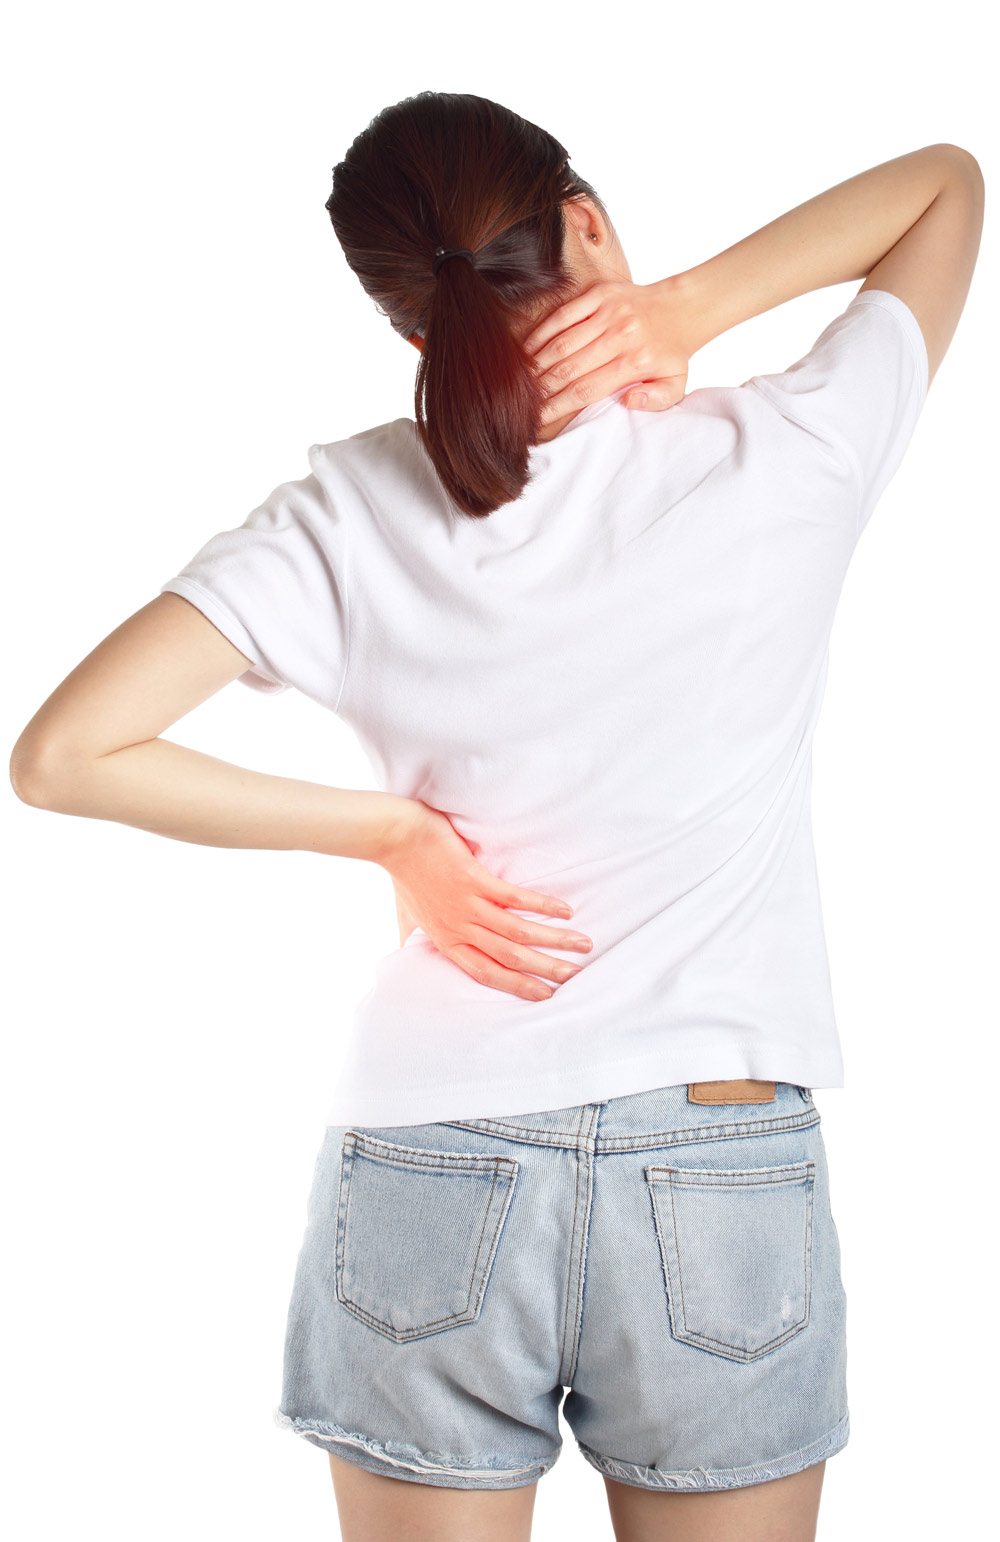 Rückenschmerzen an Hals- und Lendenwirbelsäule